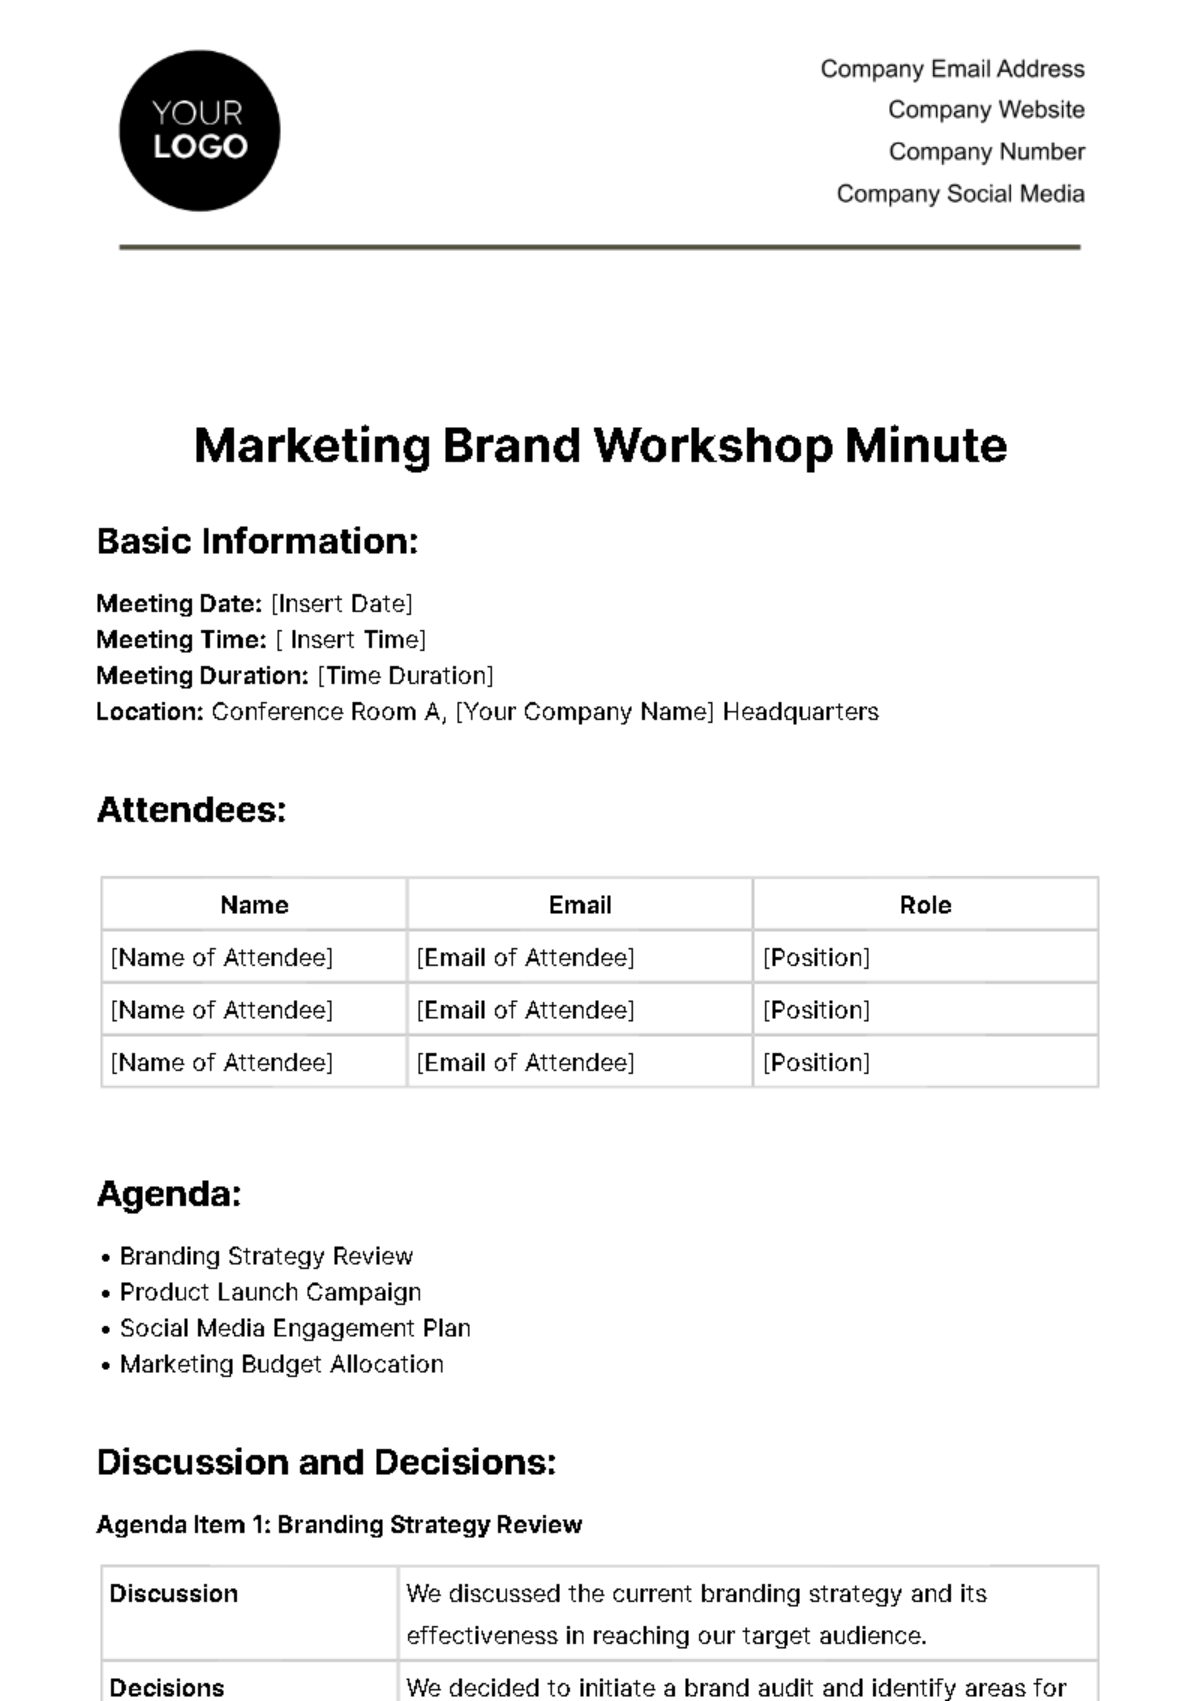 Free Marketing Brand Workshop Minute Template